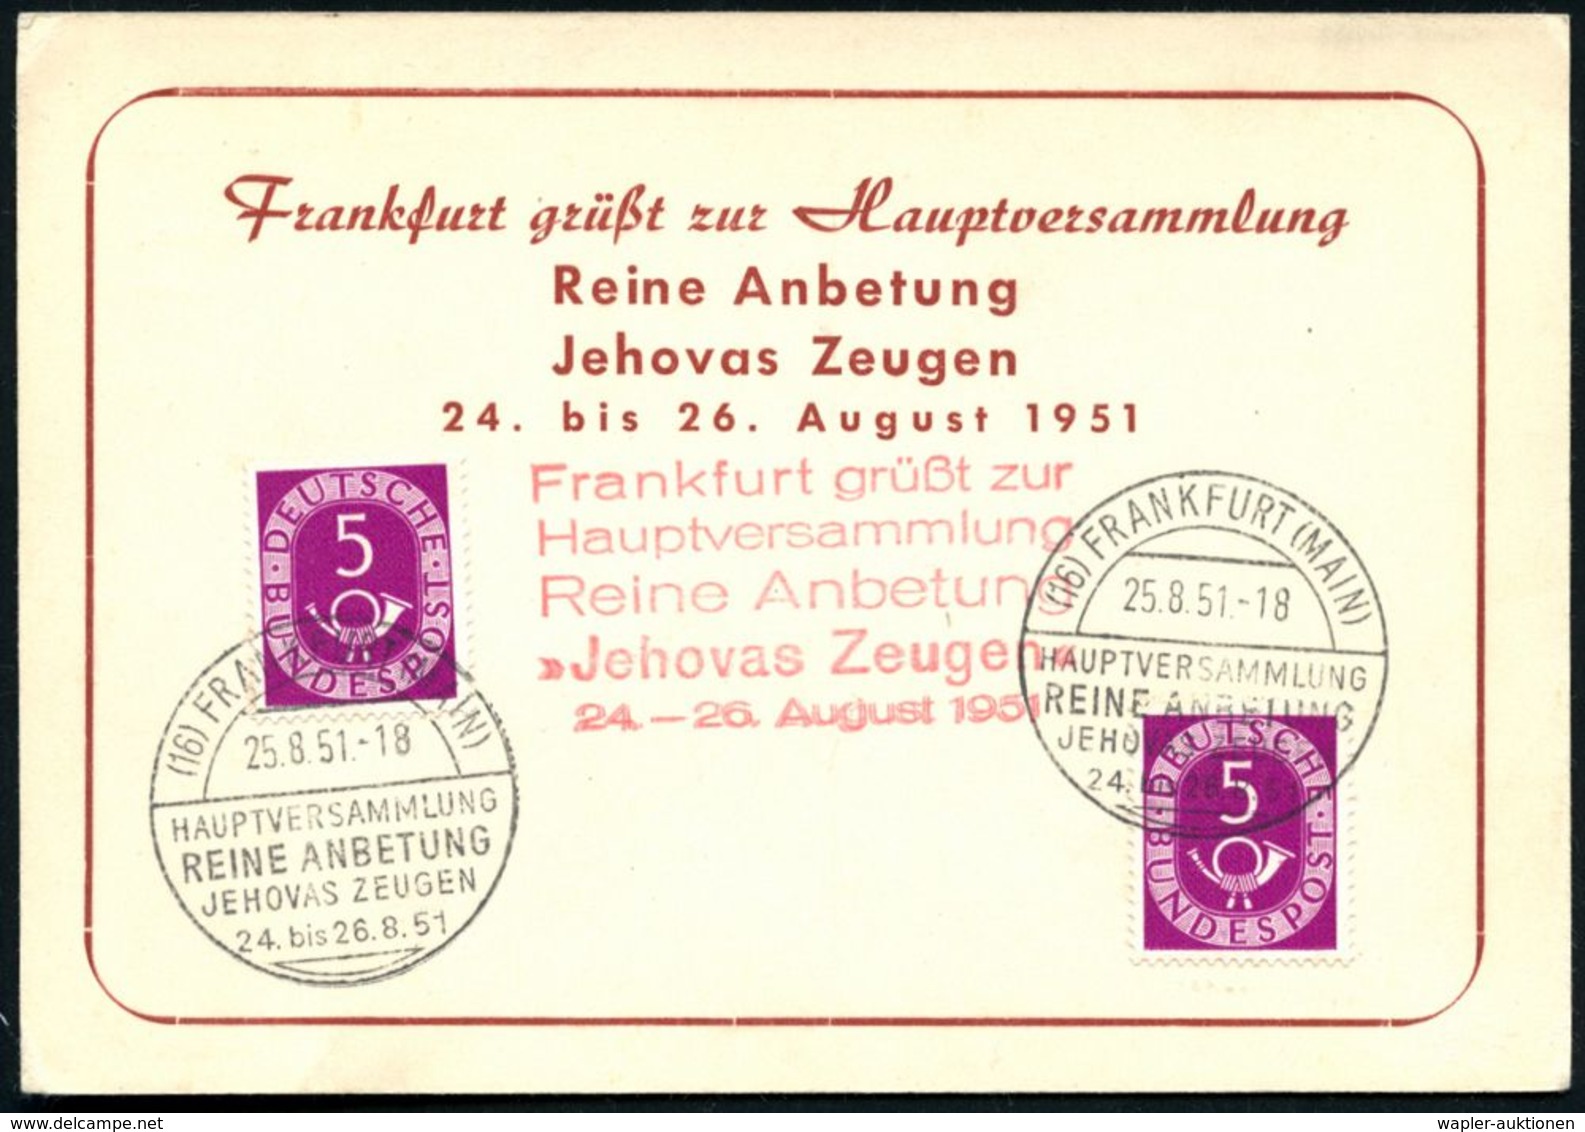 (16) FRANKFURT (MAIN)/ HAUPTVERSAMMLUNG/ REINE ANBETUNG/ JEHOVAS ZEUGEN 1951 (25.8.) SSt + Roter HdN: Frankfurt Grüßt Zu - Cristianesimo